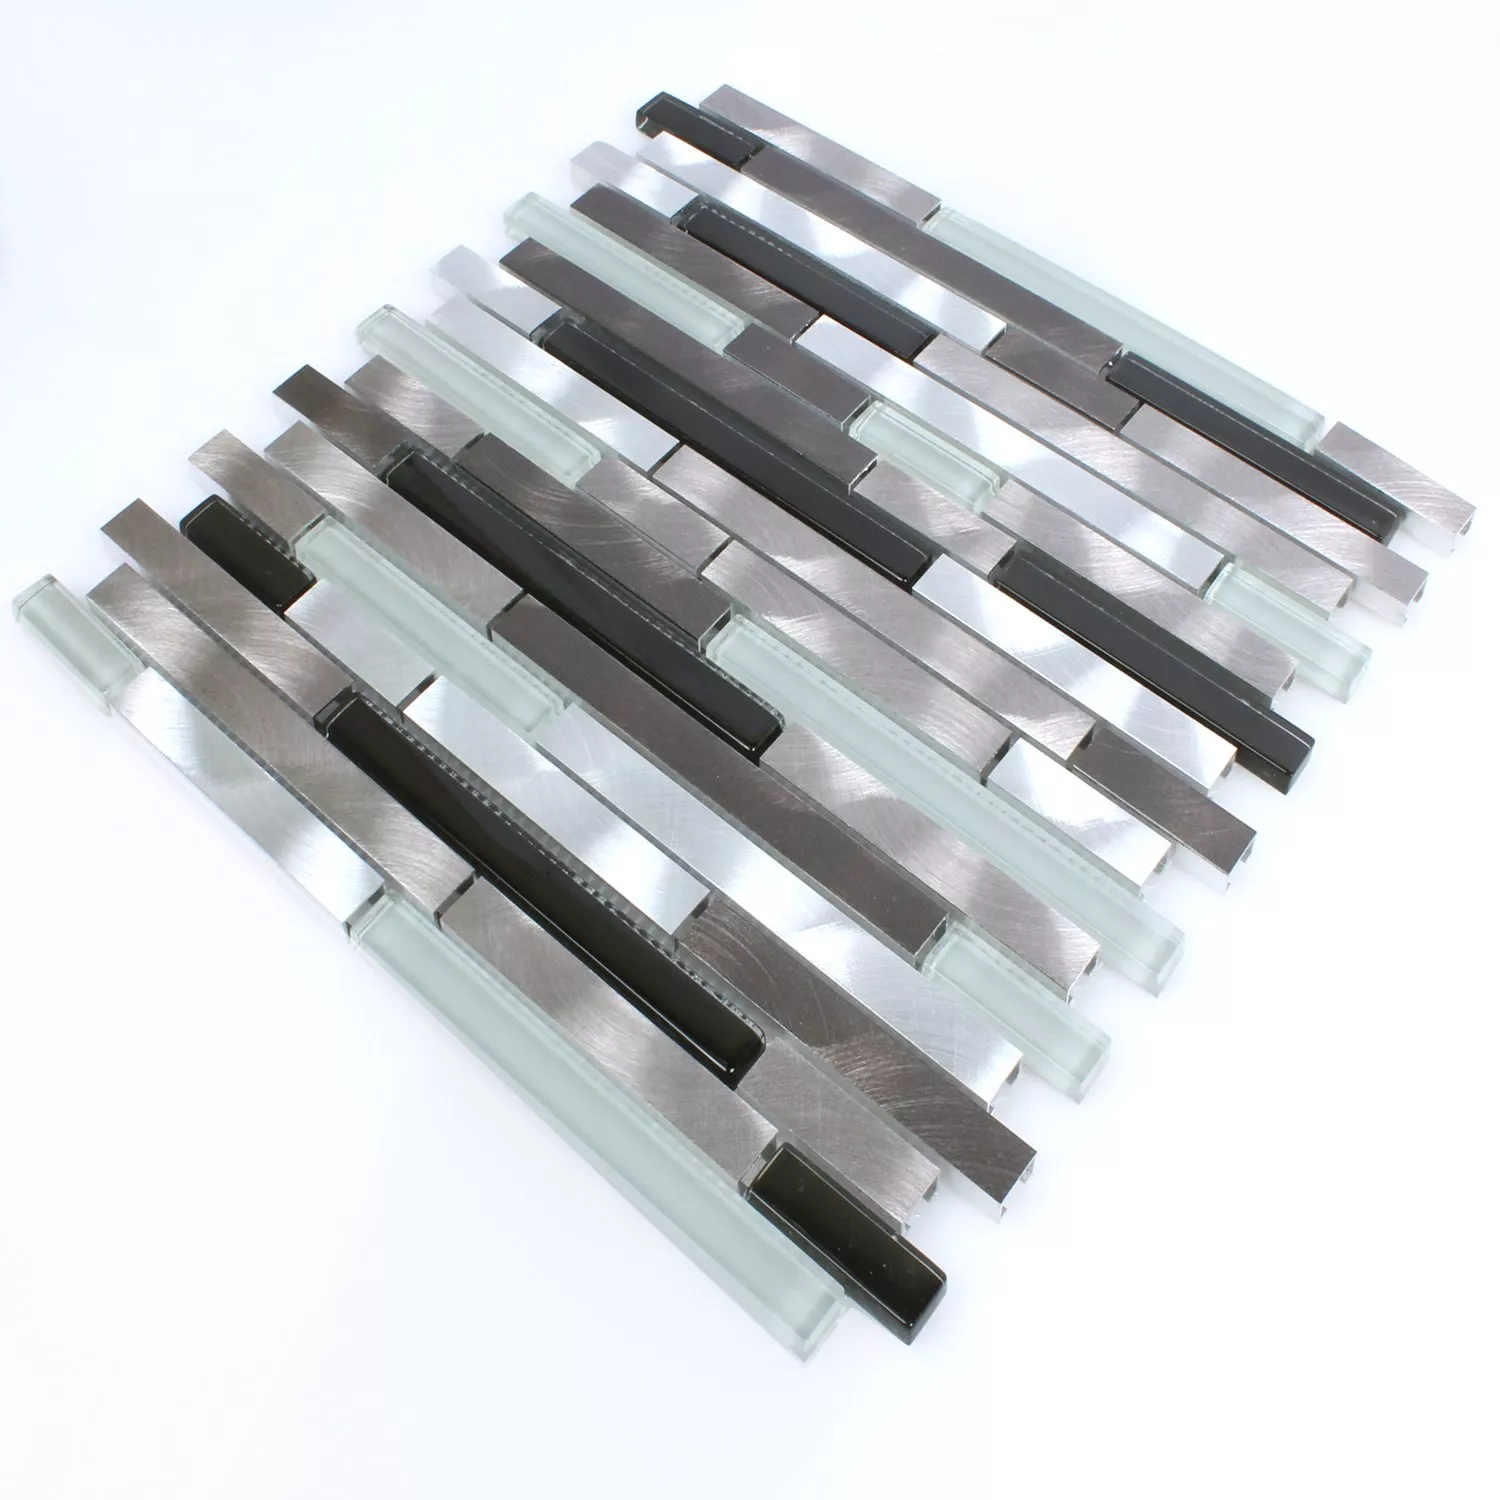 Aluminium Mosaik Fliser Glas Brun Sort Hvid Sølv